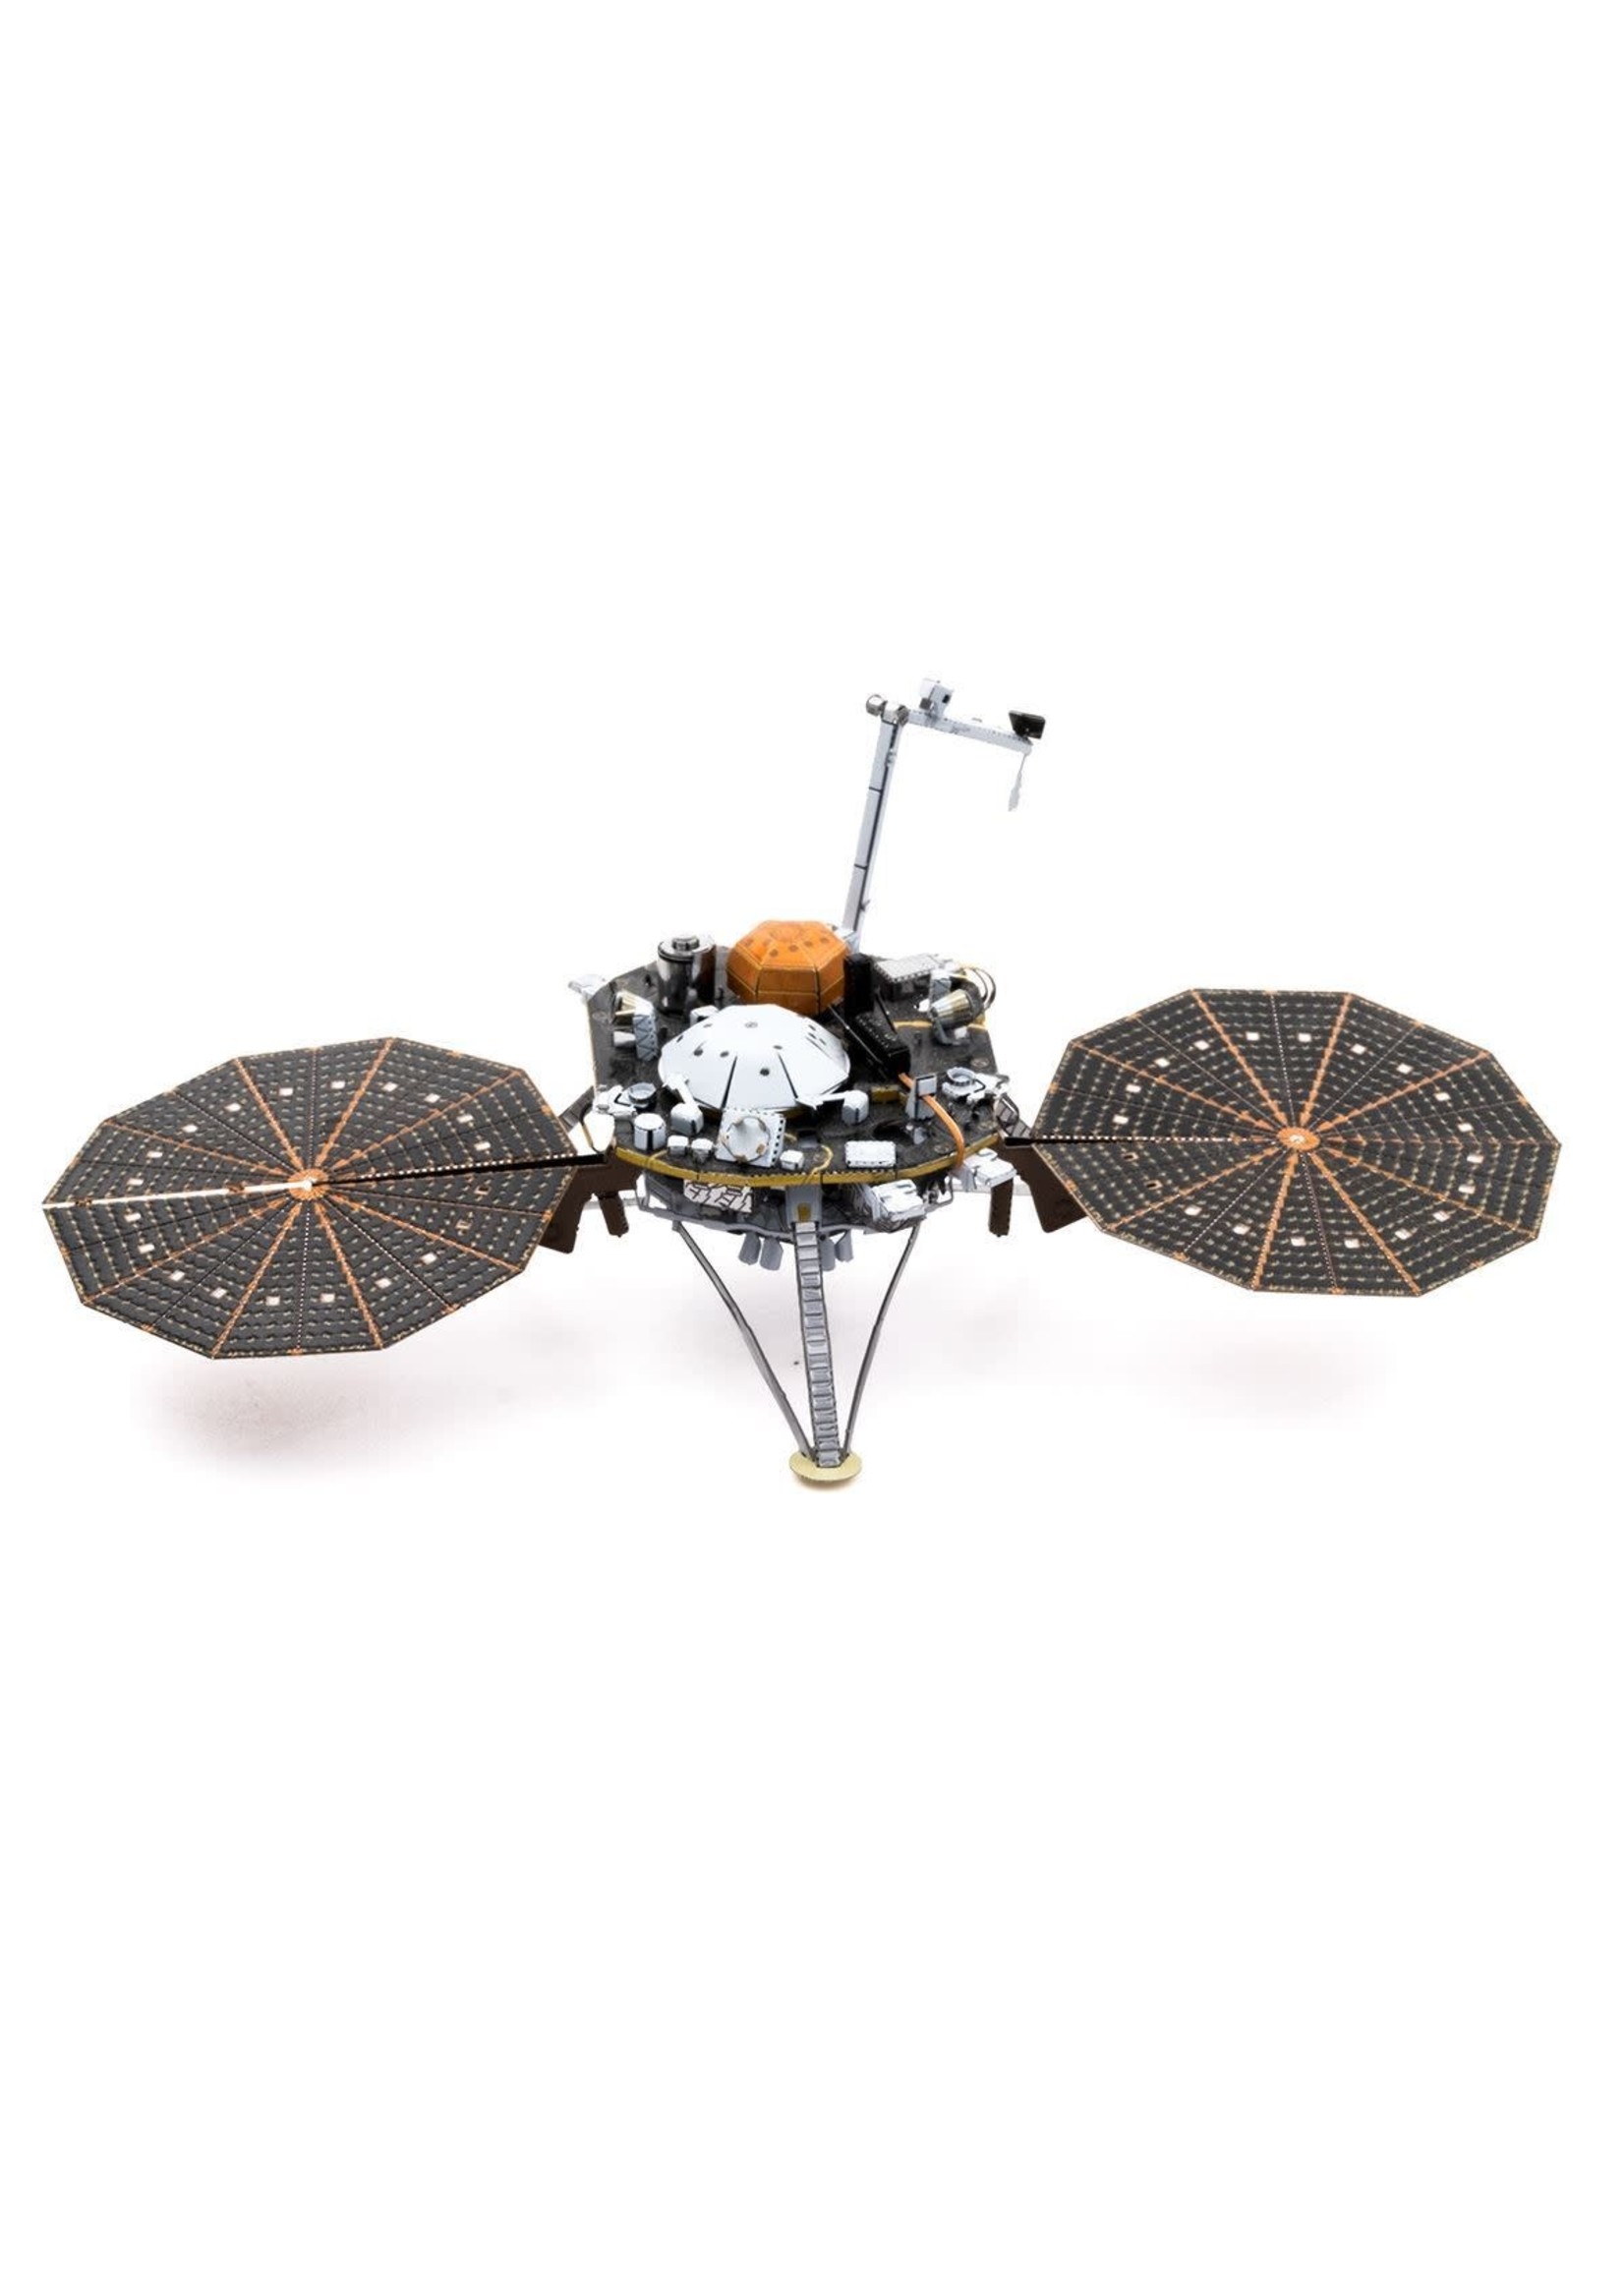 MetalWorks Insight Mars Lander